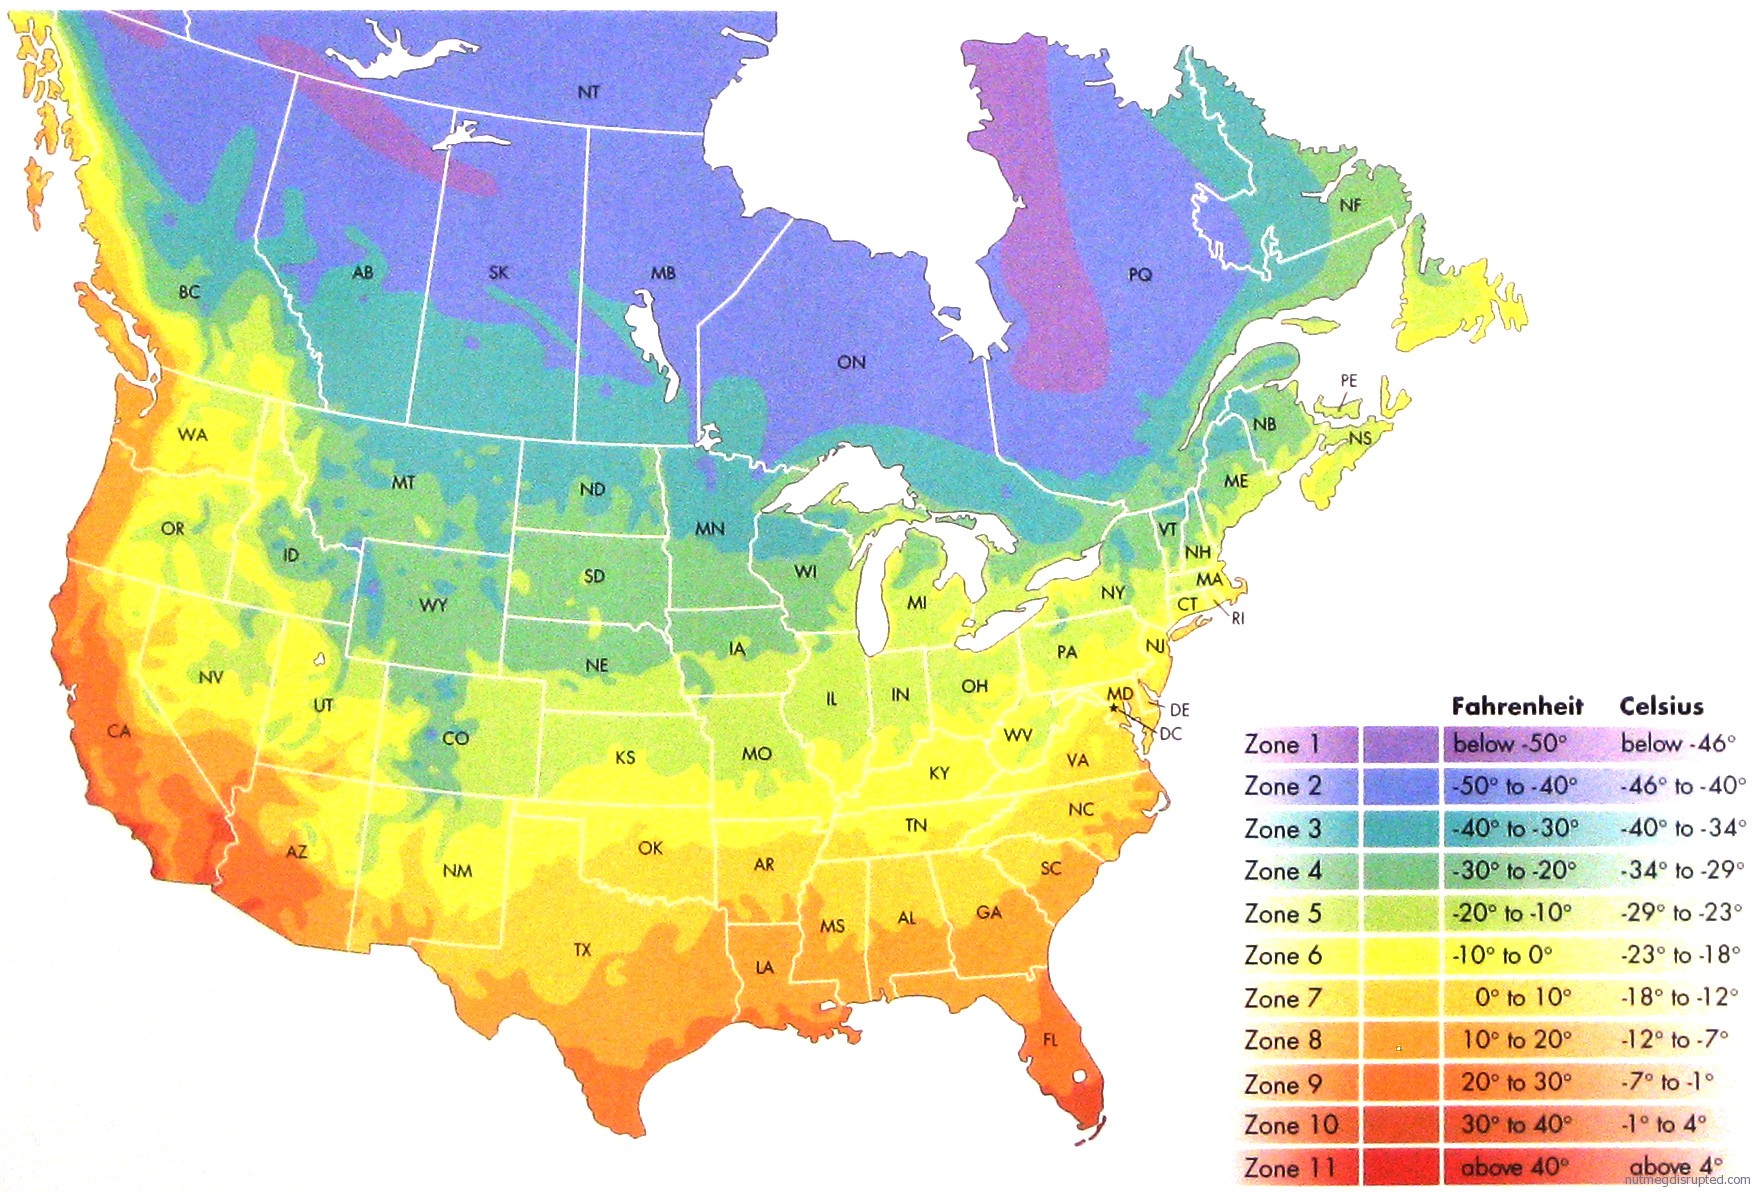 North American Zone Map 